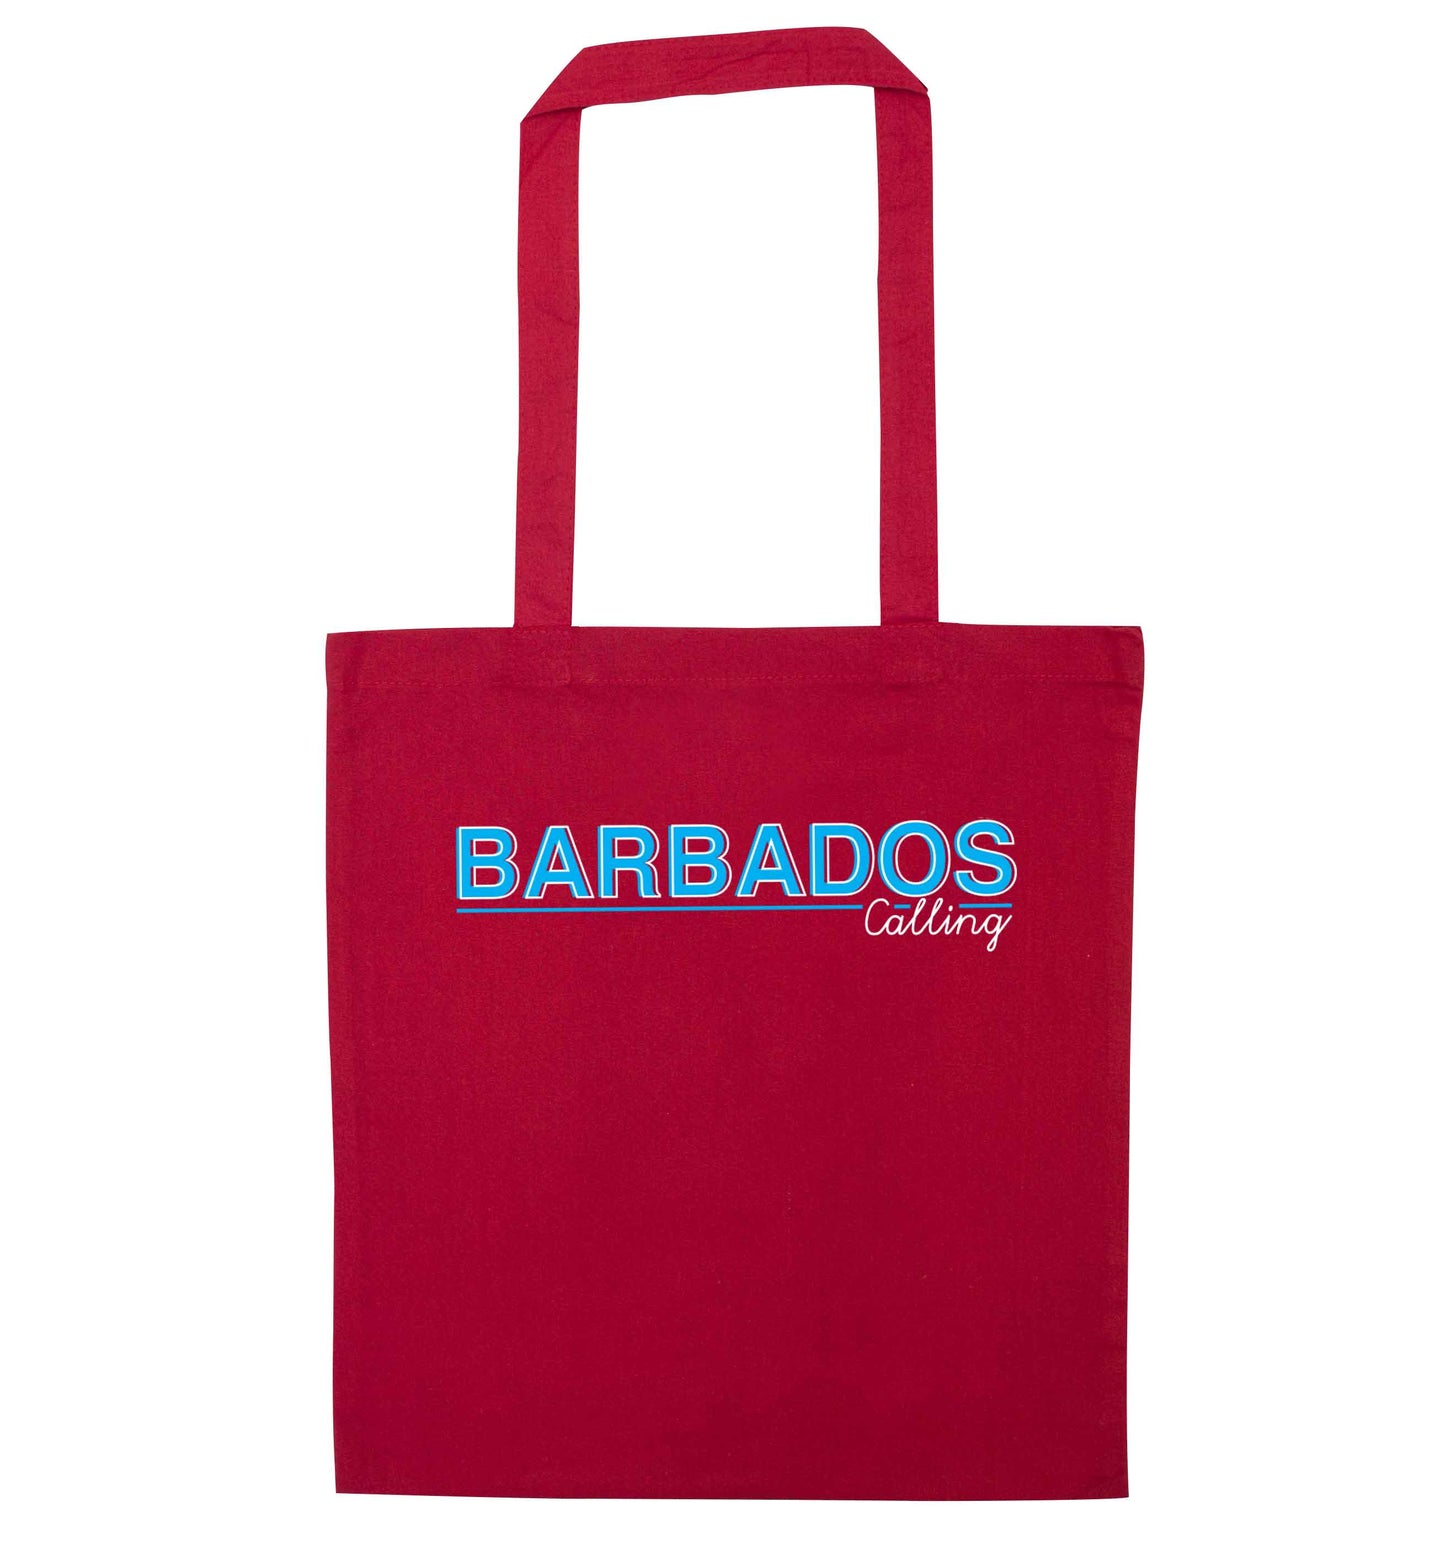 Barbados calling red tote bag